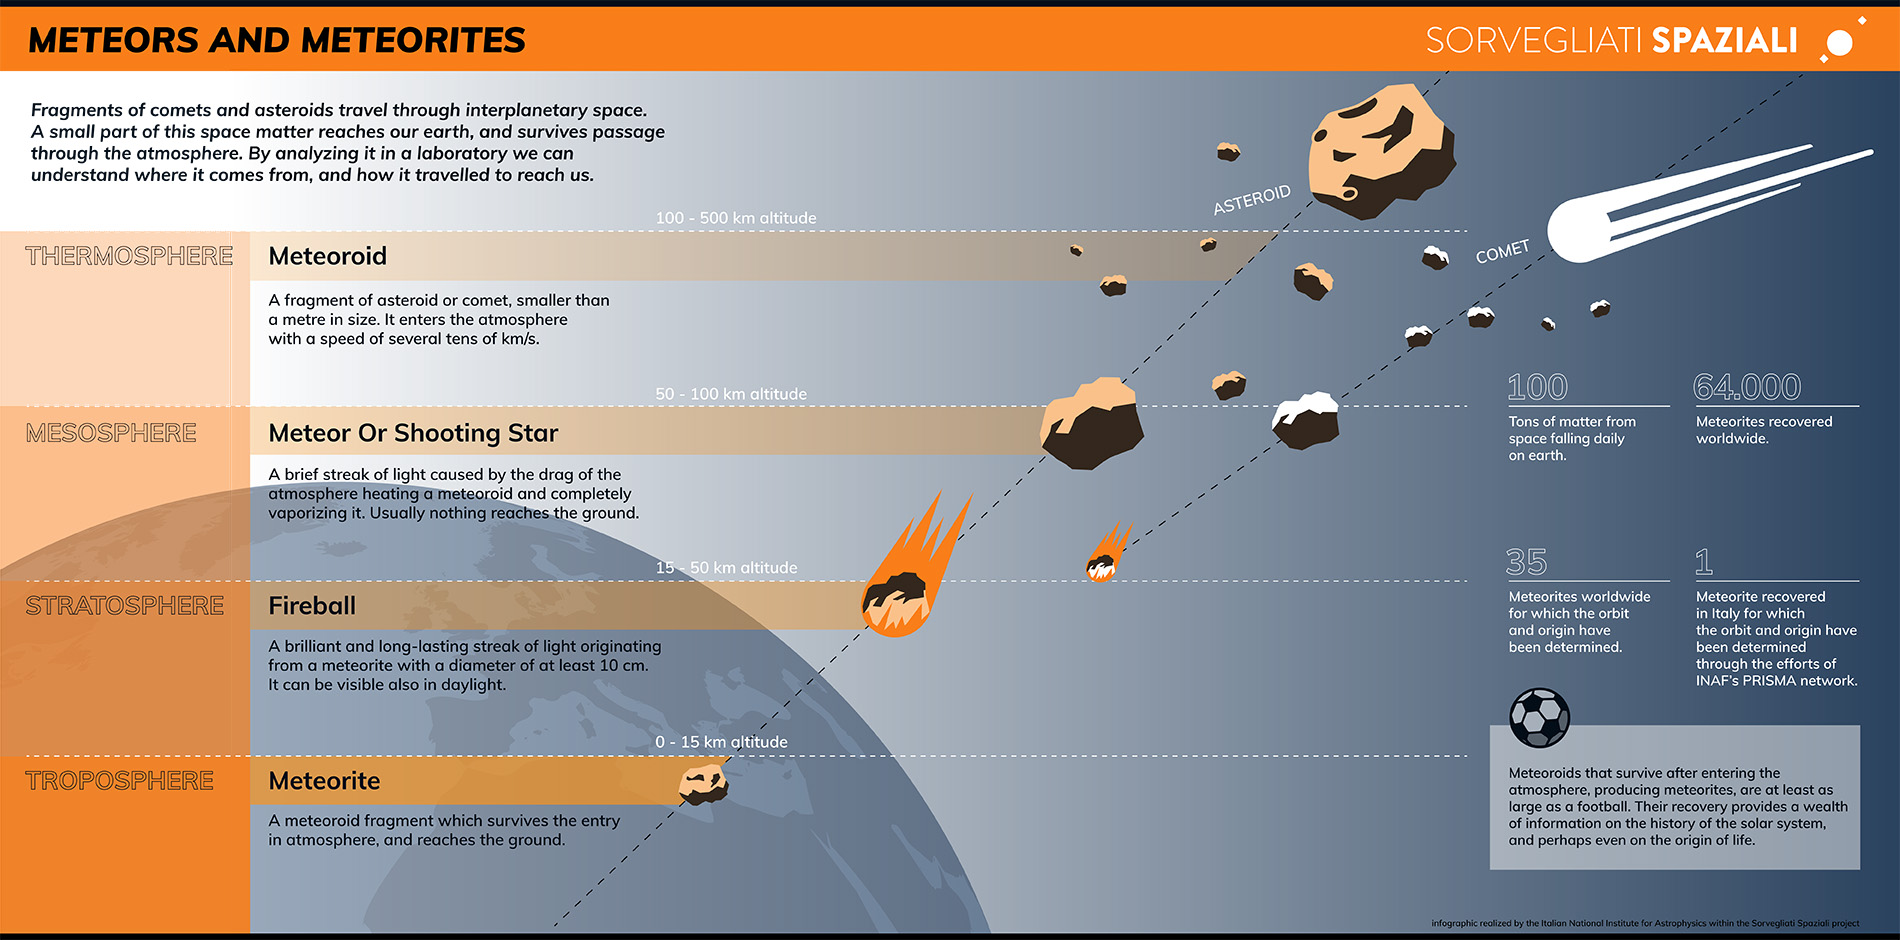 Meteors and meteorites infographic